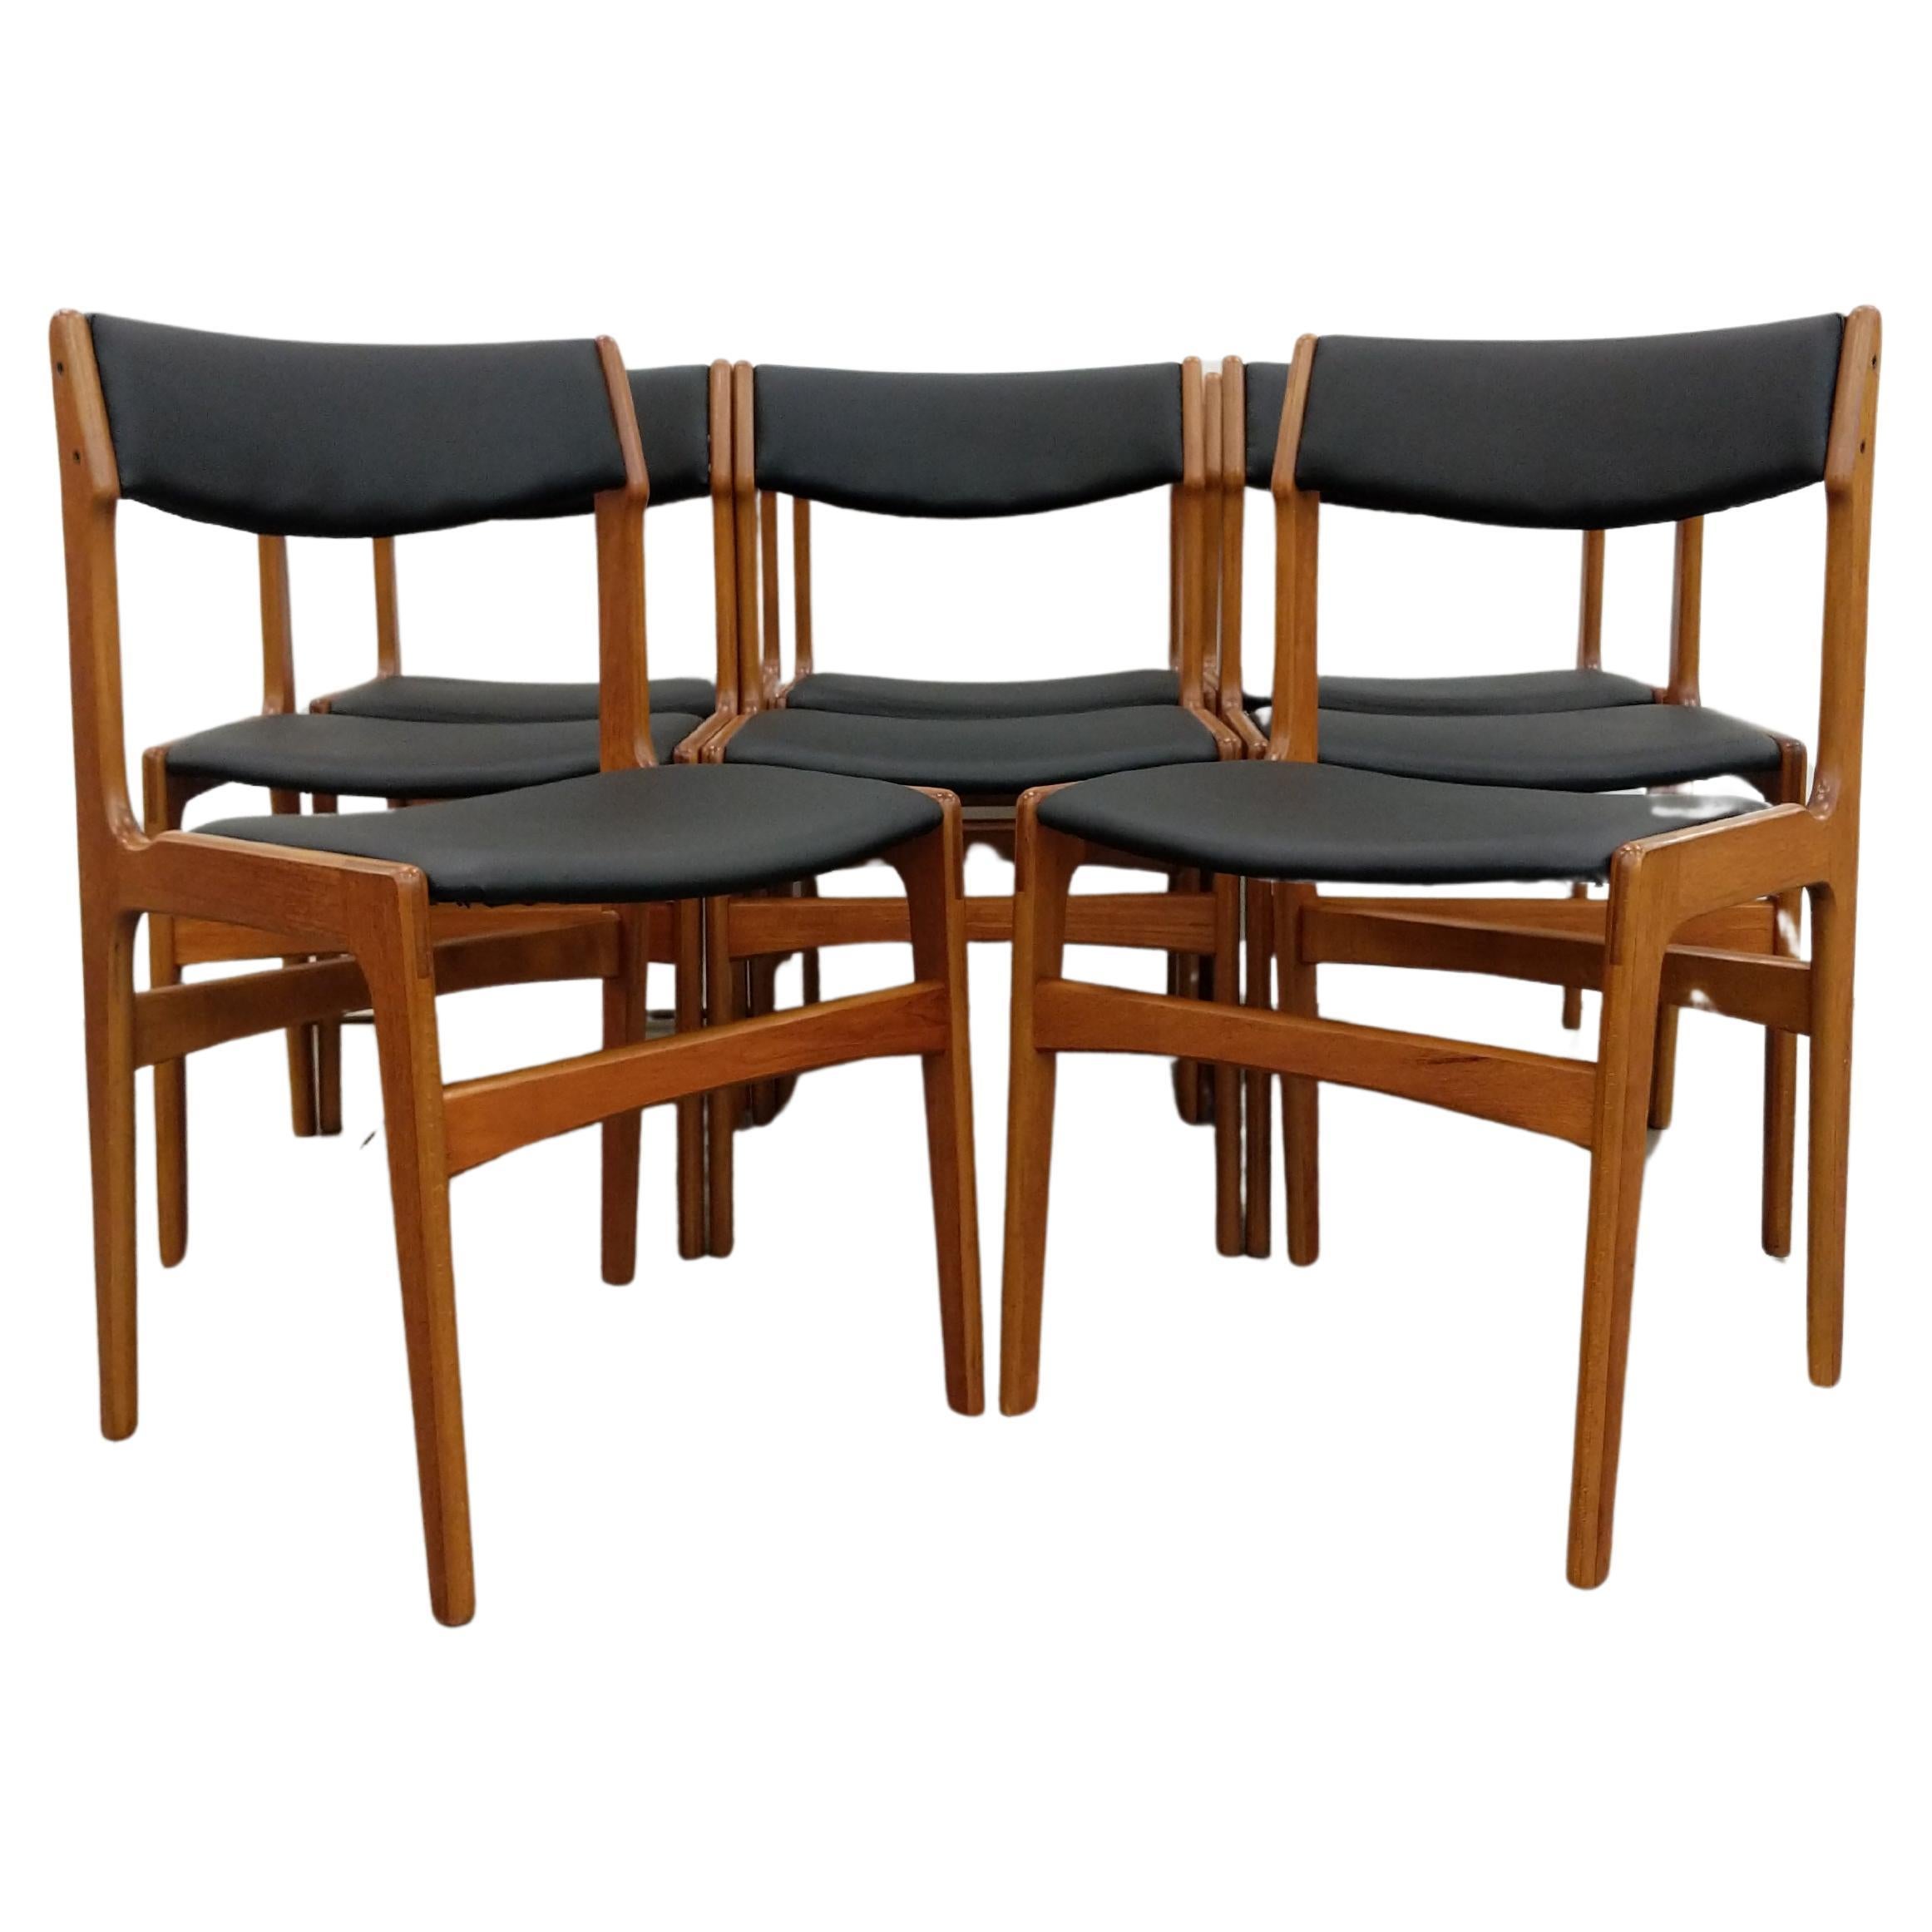 Set of 8 Vintage Danish Mid Century Modern Erik Buch Dining Chairs